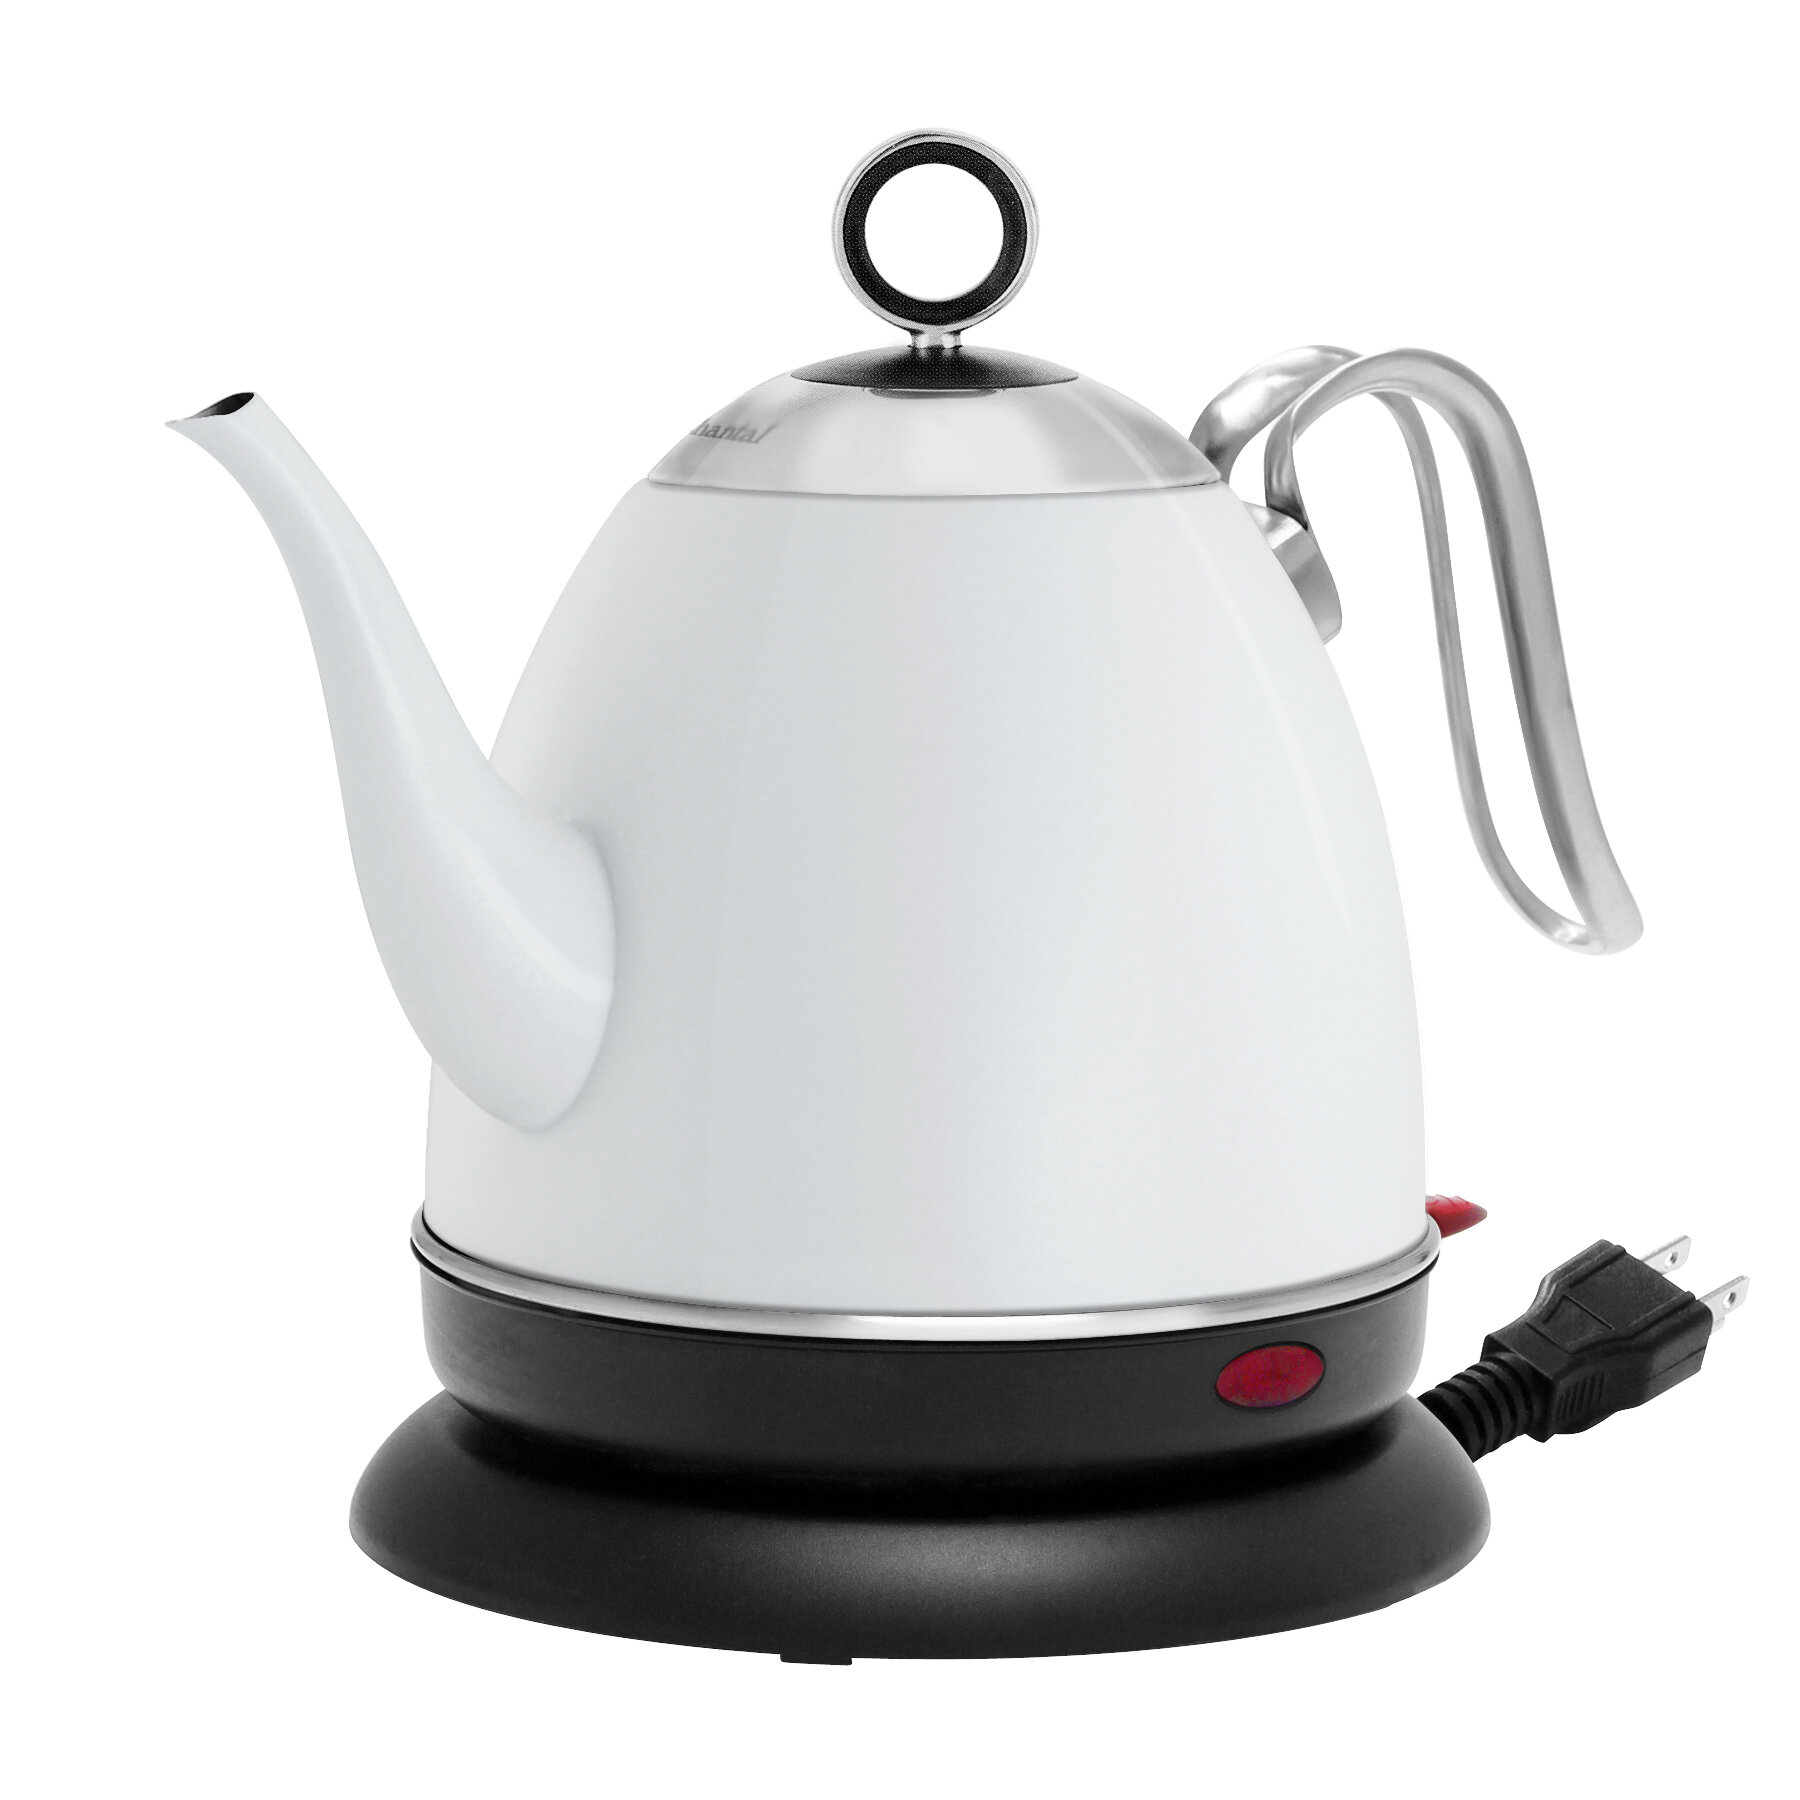 chantal electric tea kettle